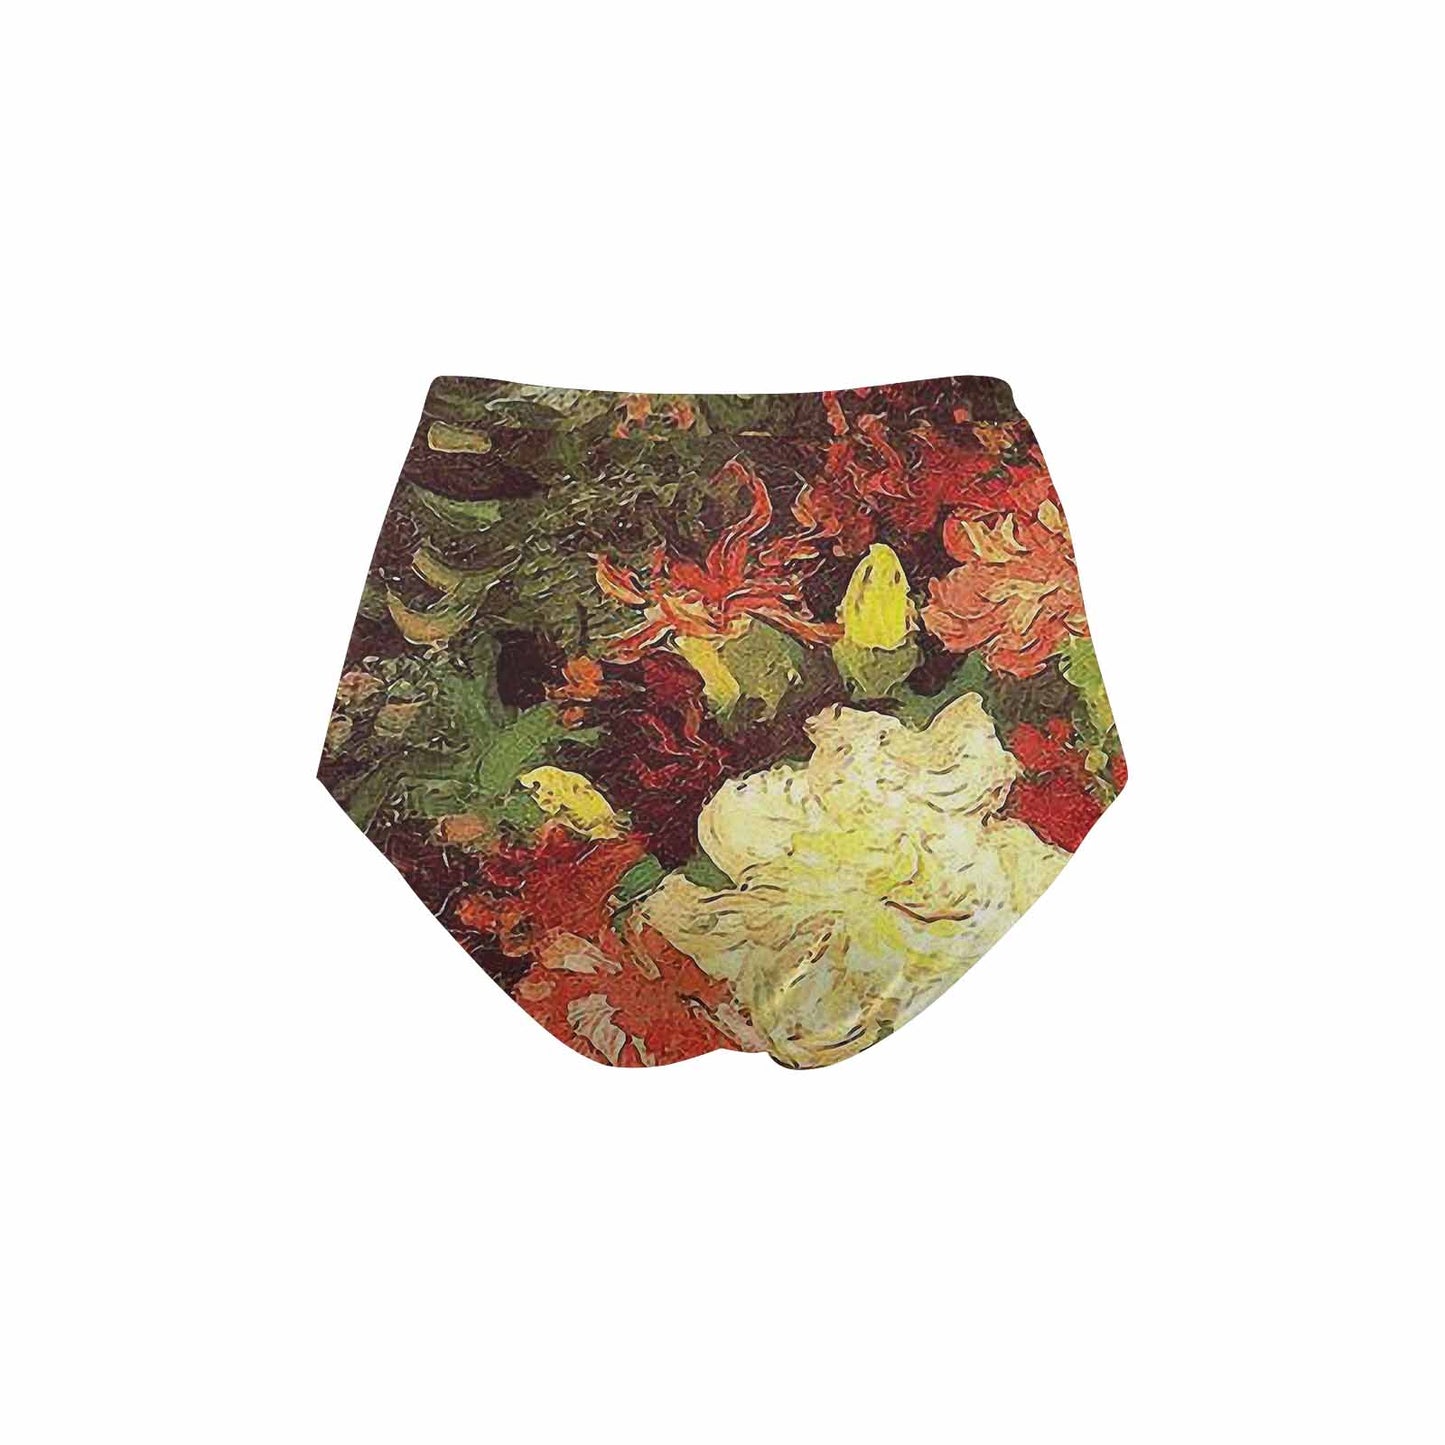 Vintage floral High waist bikini bottom, Design 33